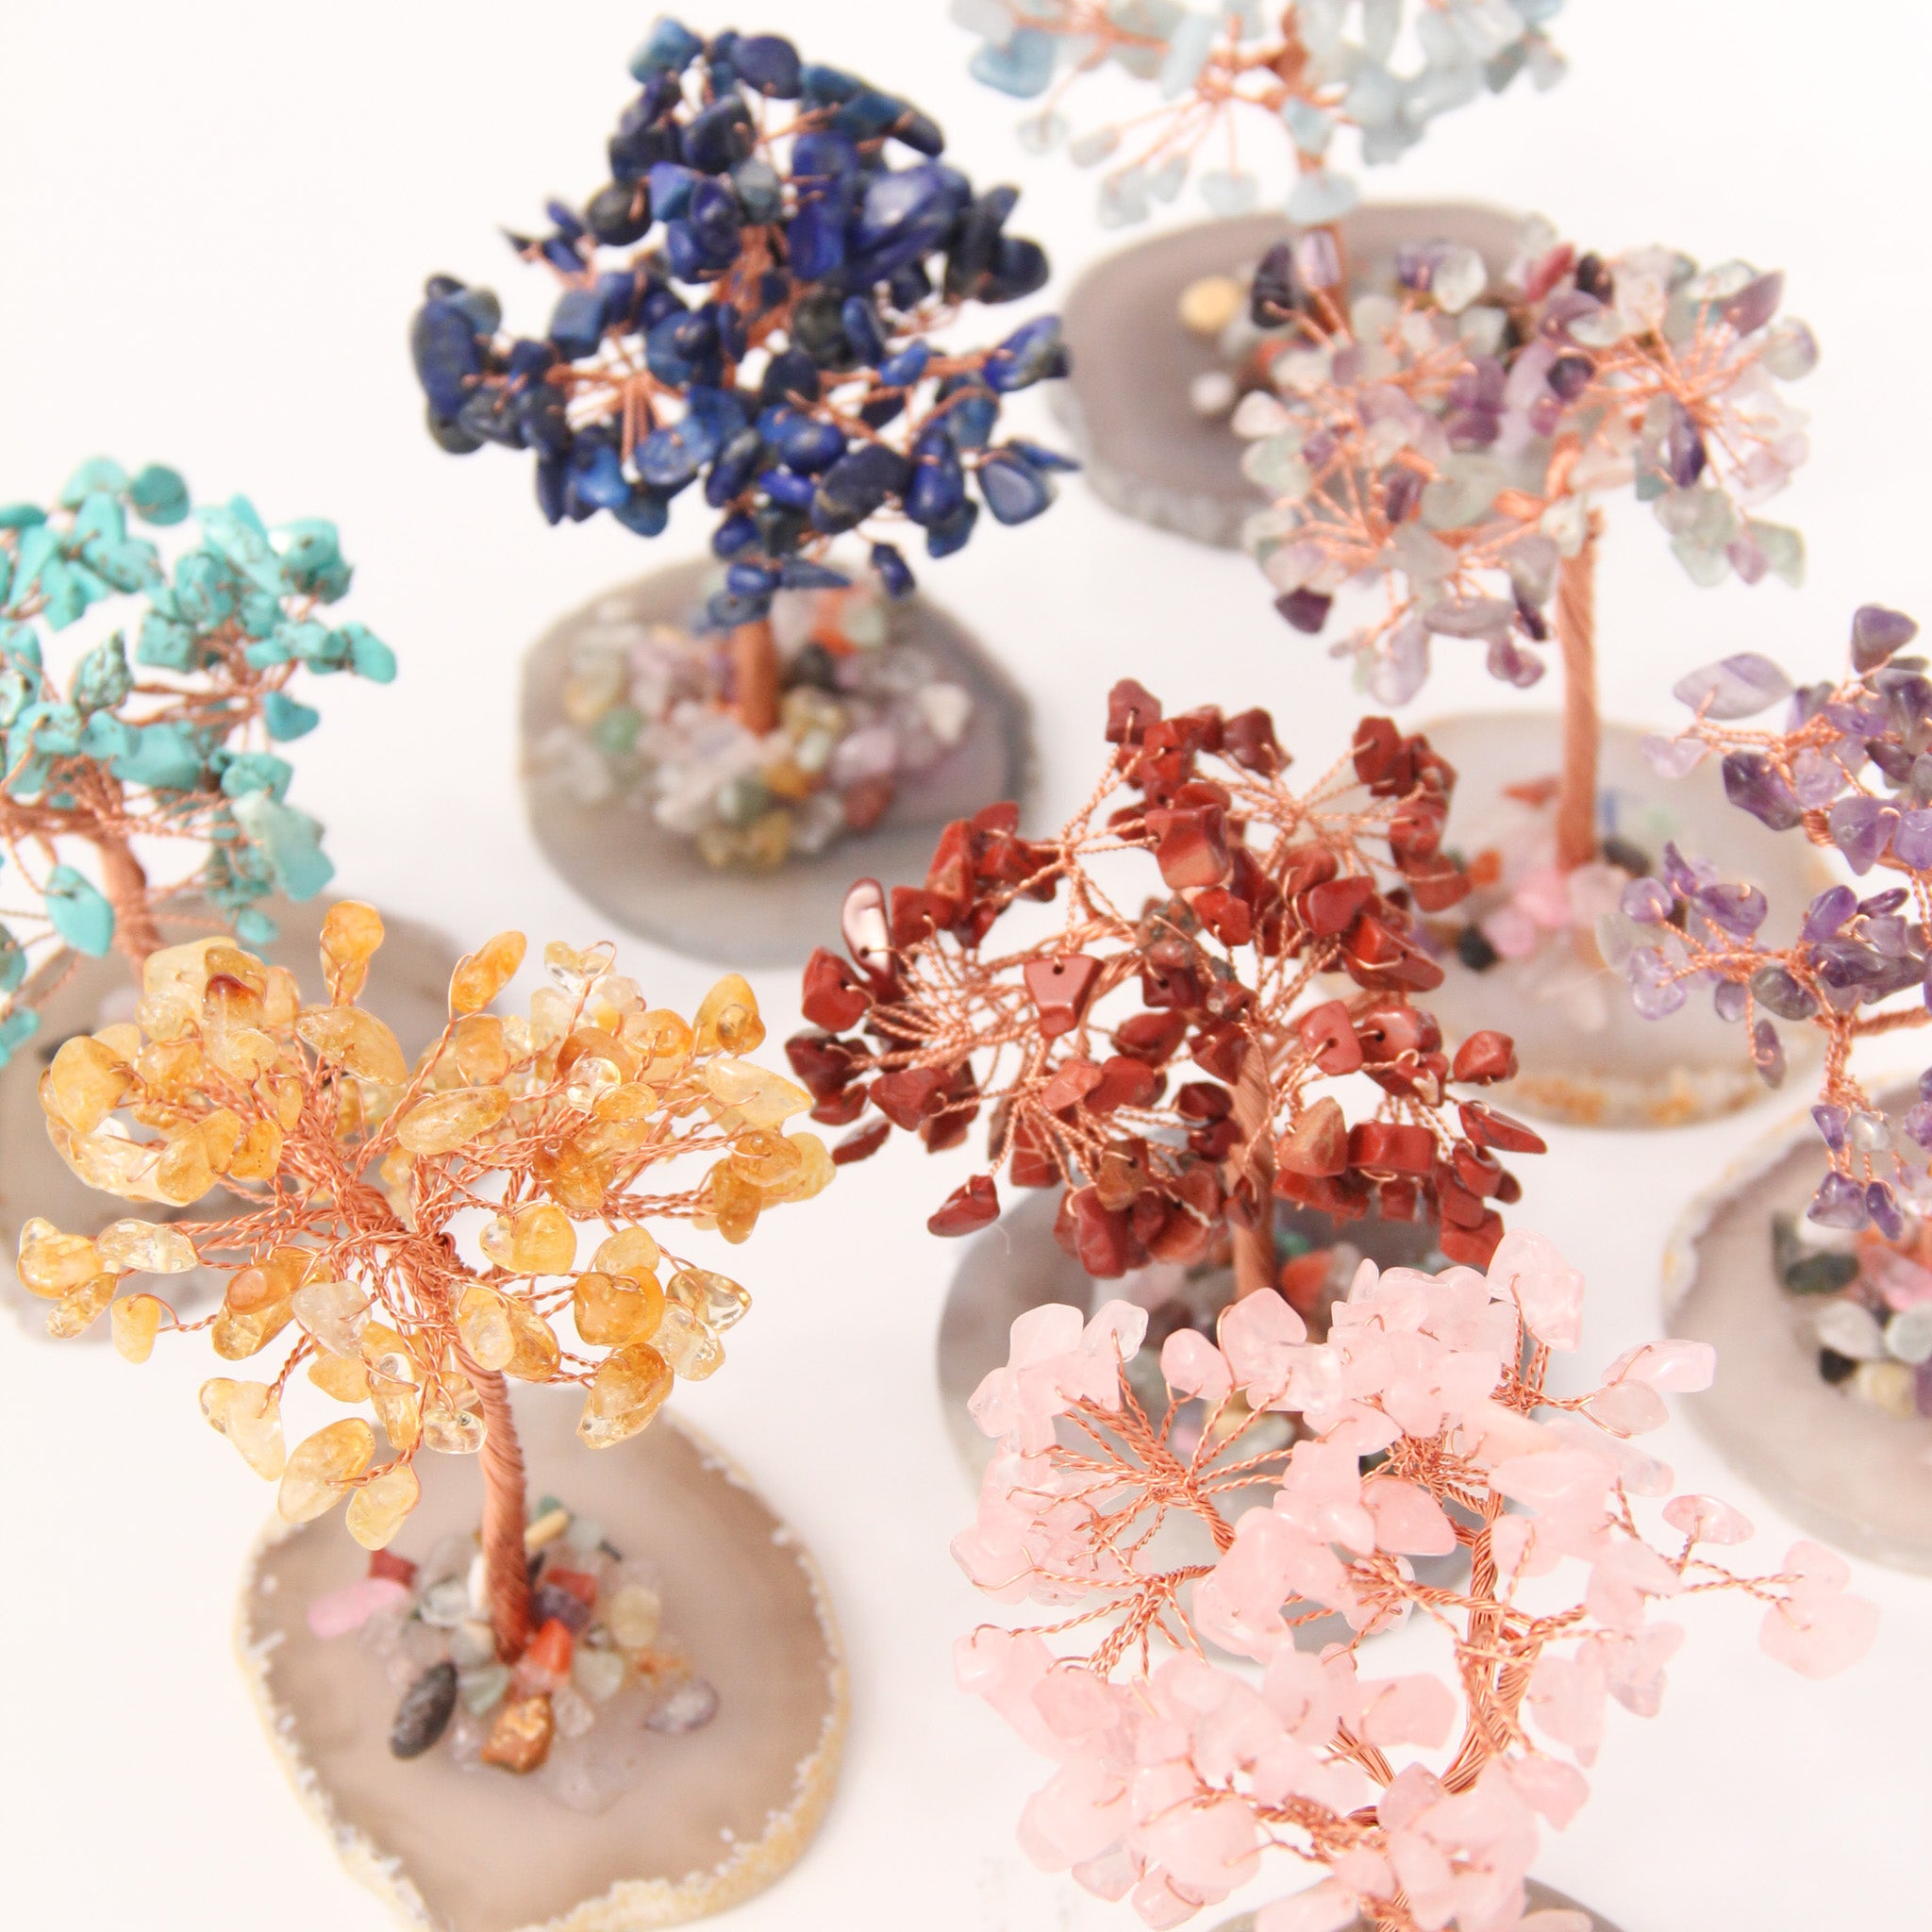 Turquoise Healing Mini Crystal Tree